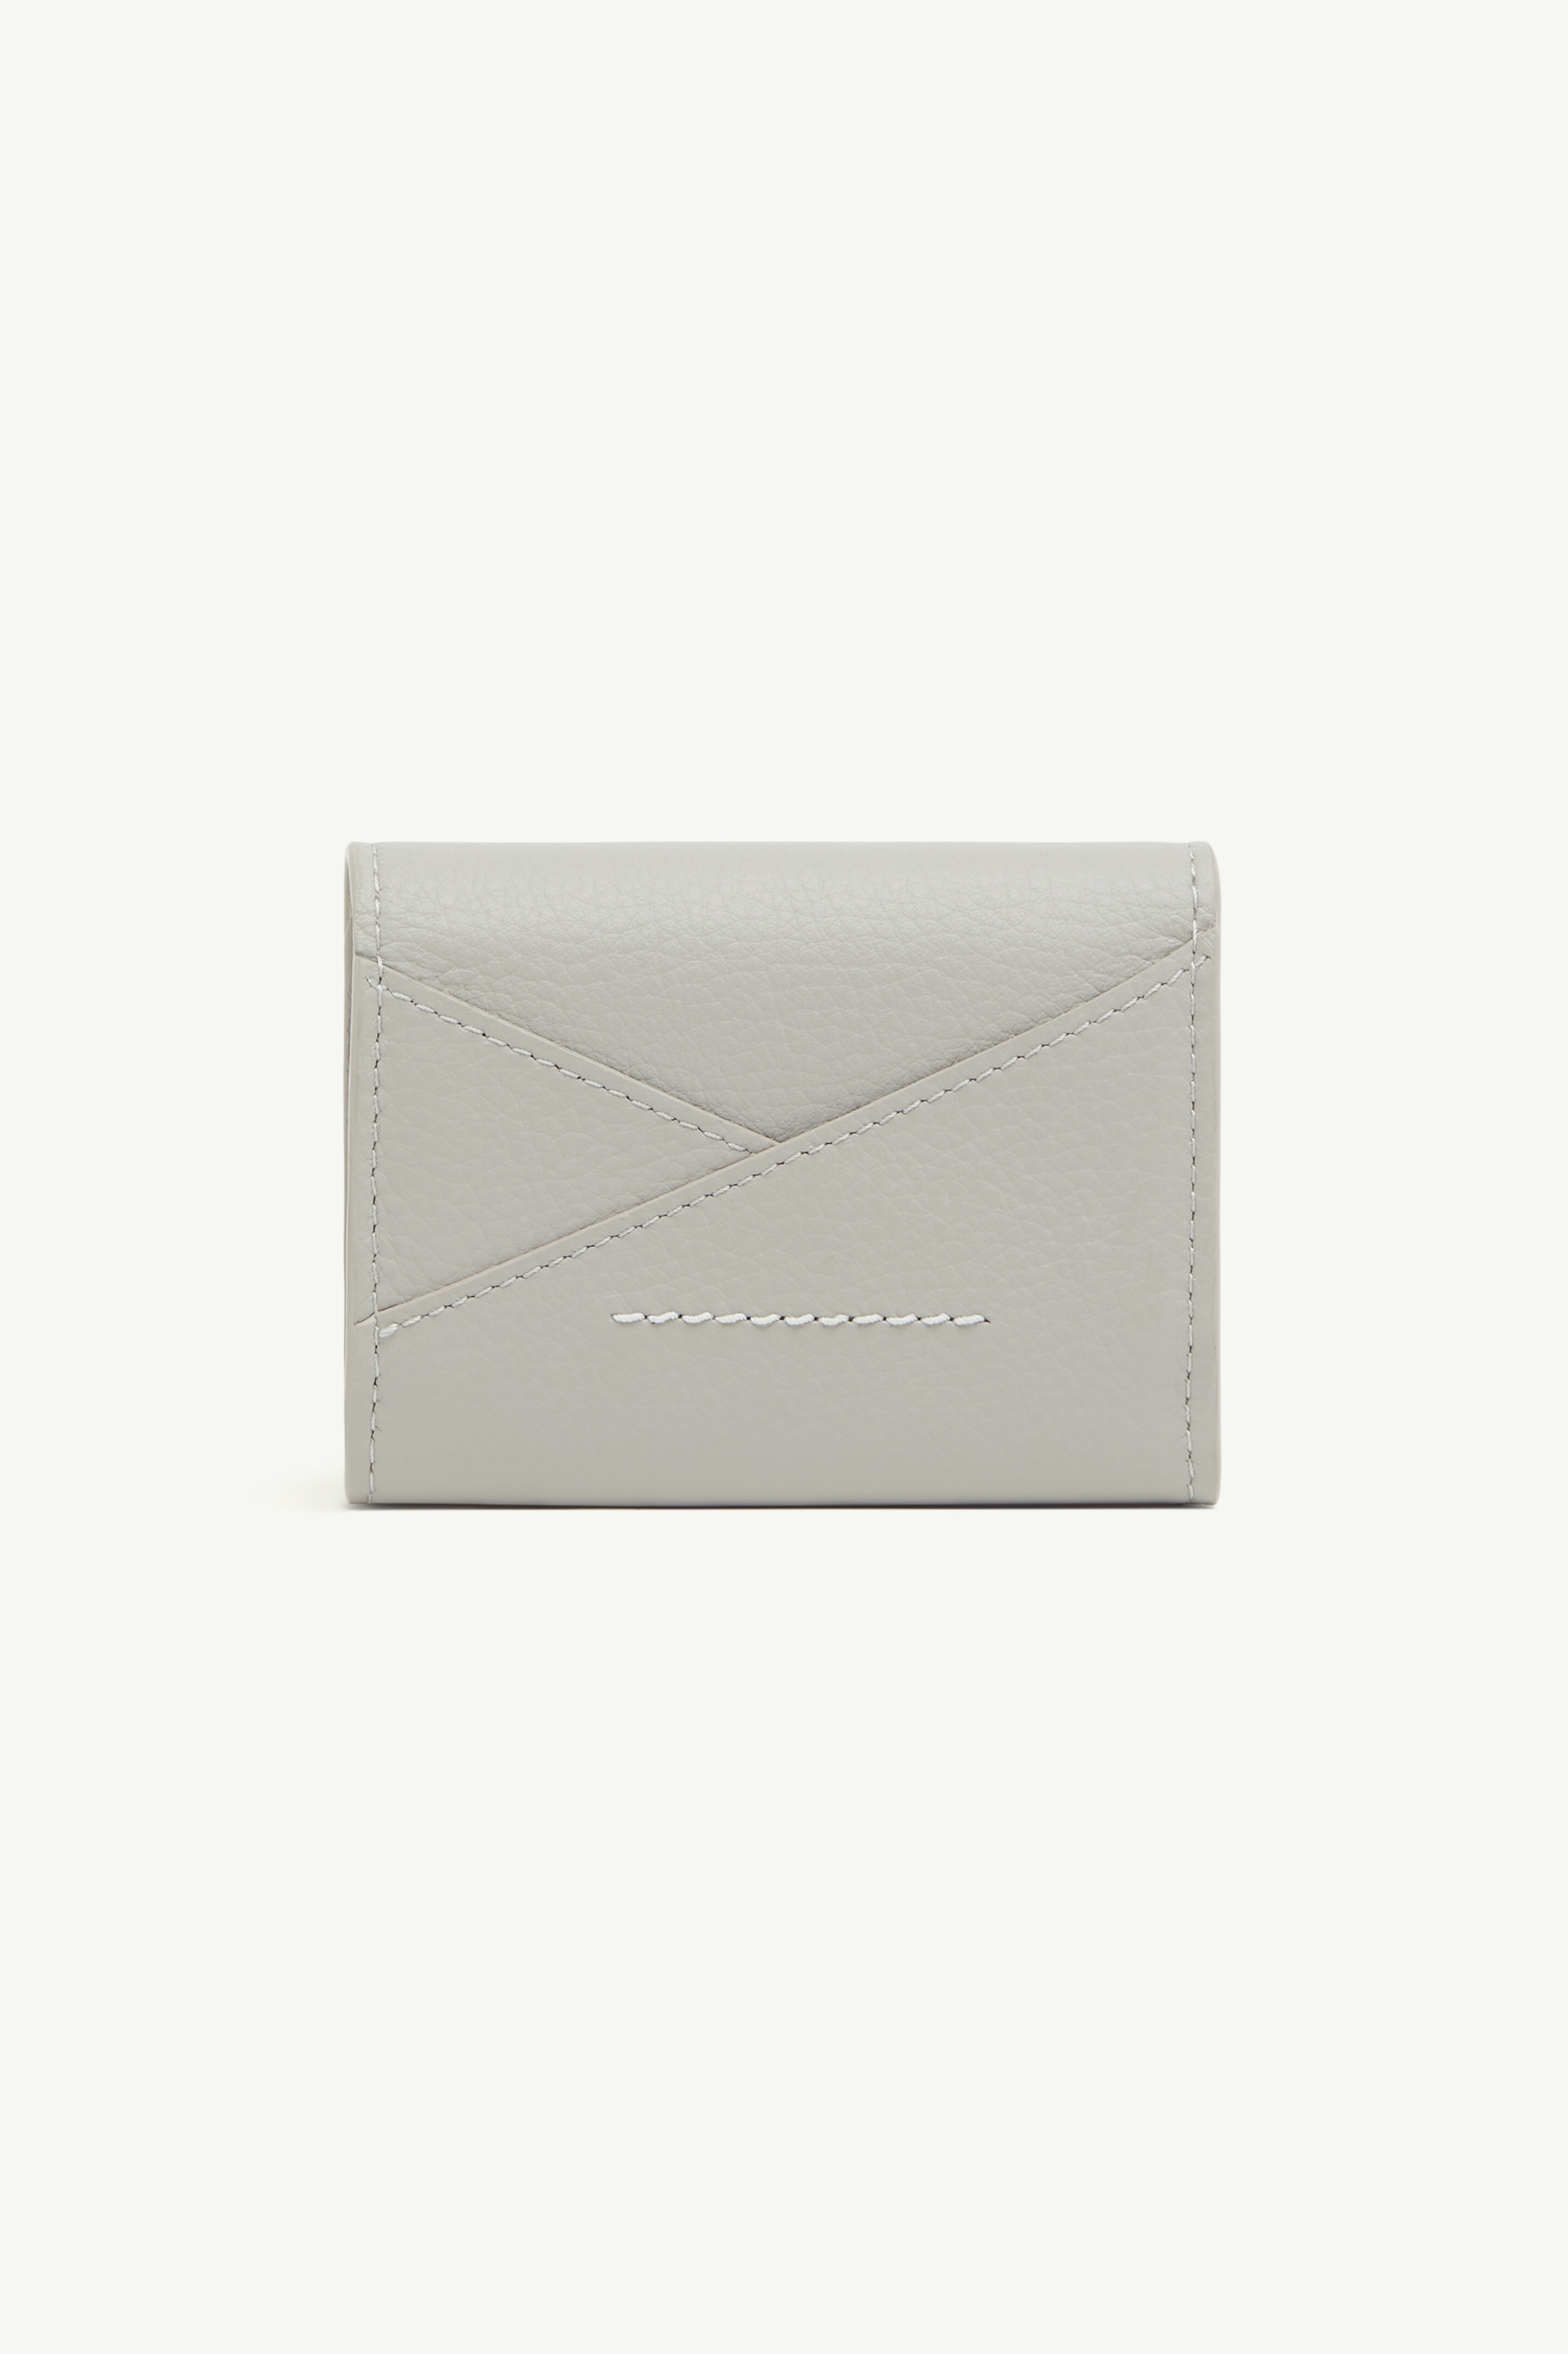 Japanese 6 flap wallet - 3